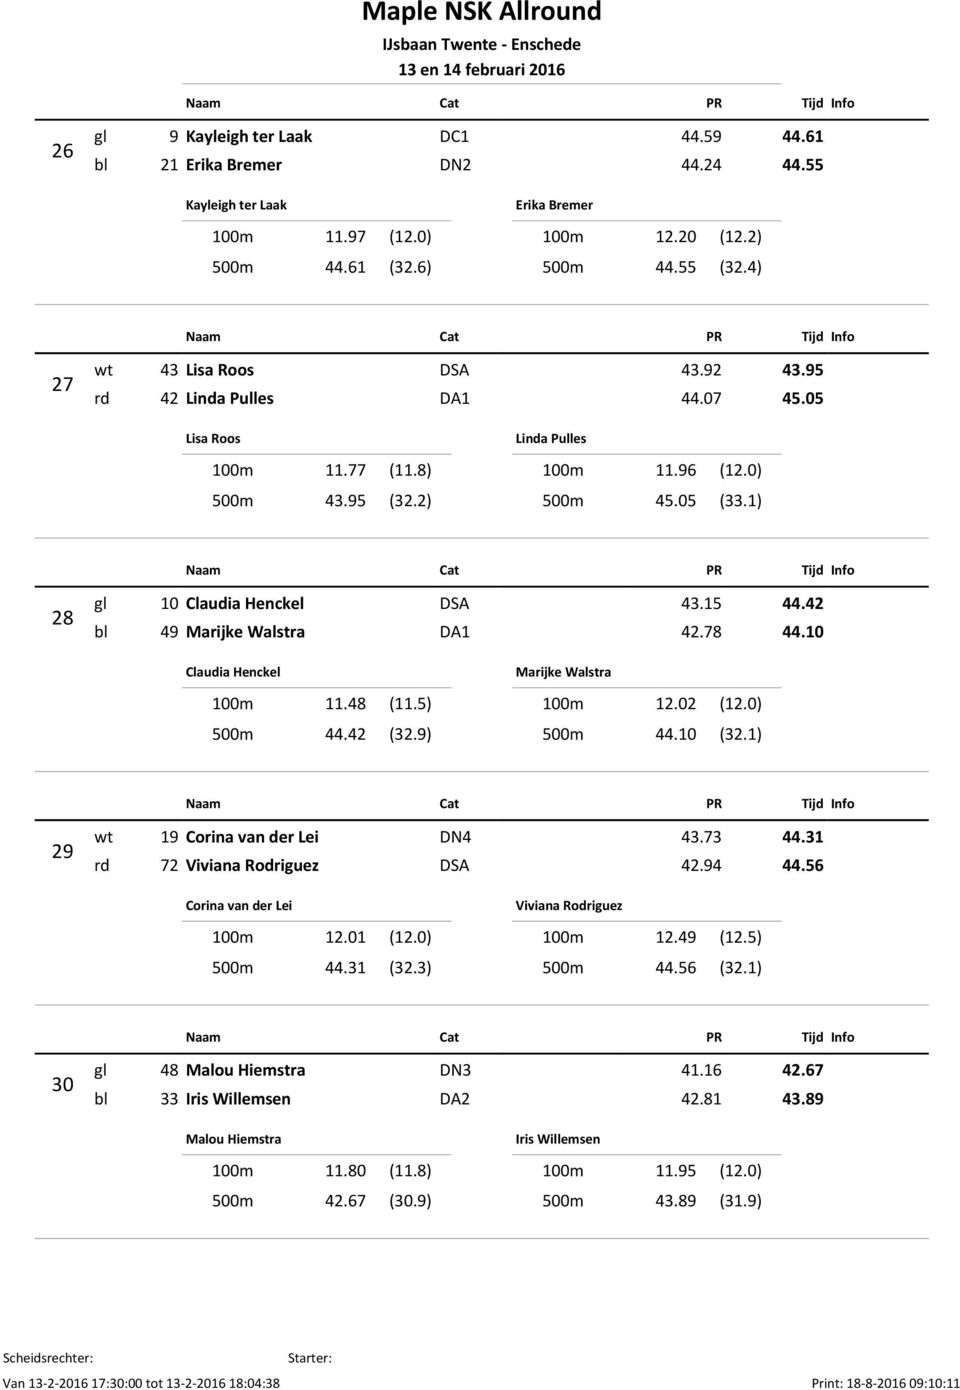 15 44.42 bl 49 Marijke Walstra DA1 42.78 44.10 Claudia Henckel 100m 11.48 (11.5) 500m 44.42 (32.9) Marijke Walstra 100m 12.02 (12.0) 500m 44.10 (32.1) 29 wt 19 Corina van der Lei DN4 43.73 44.